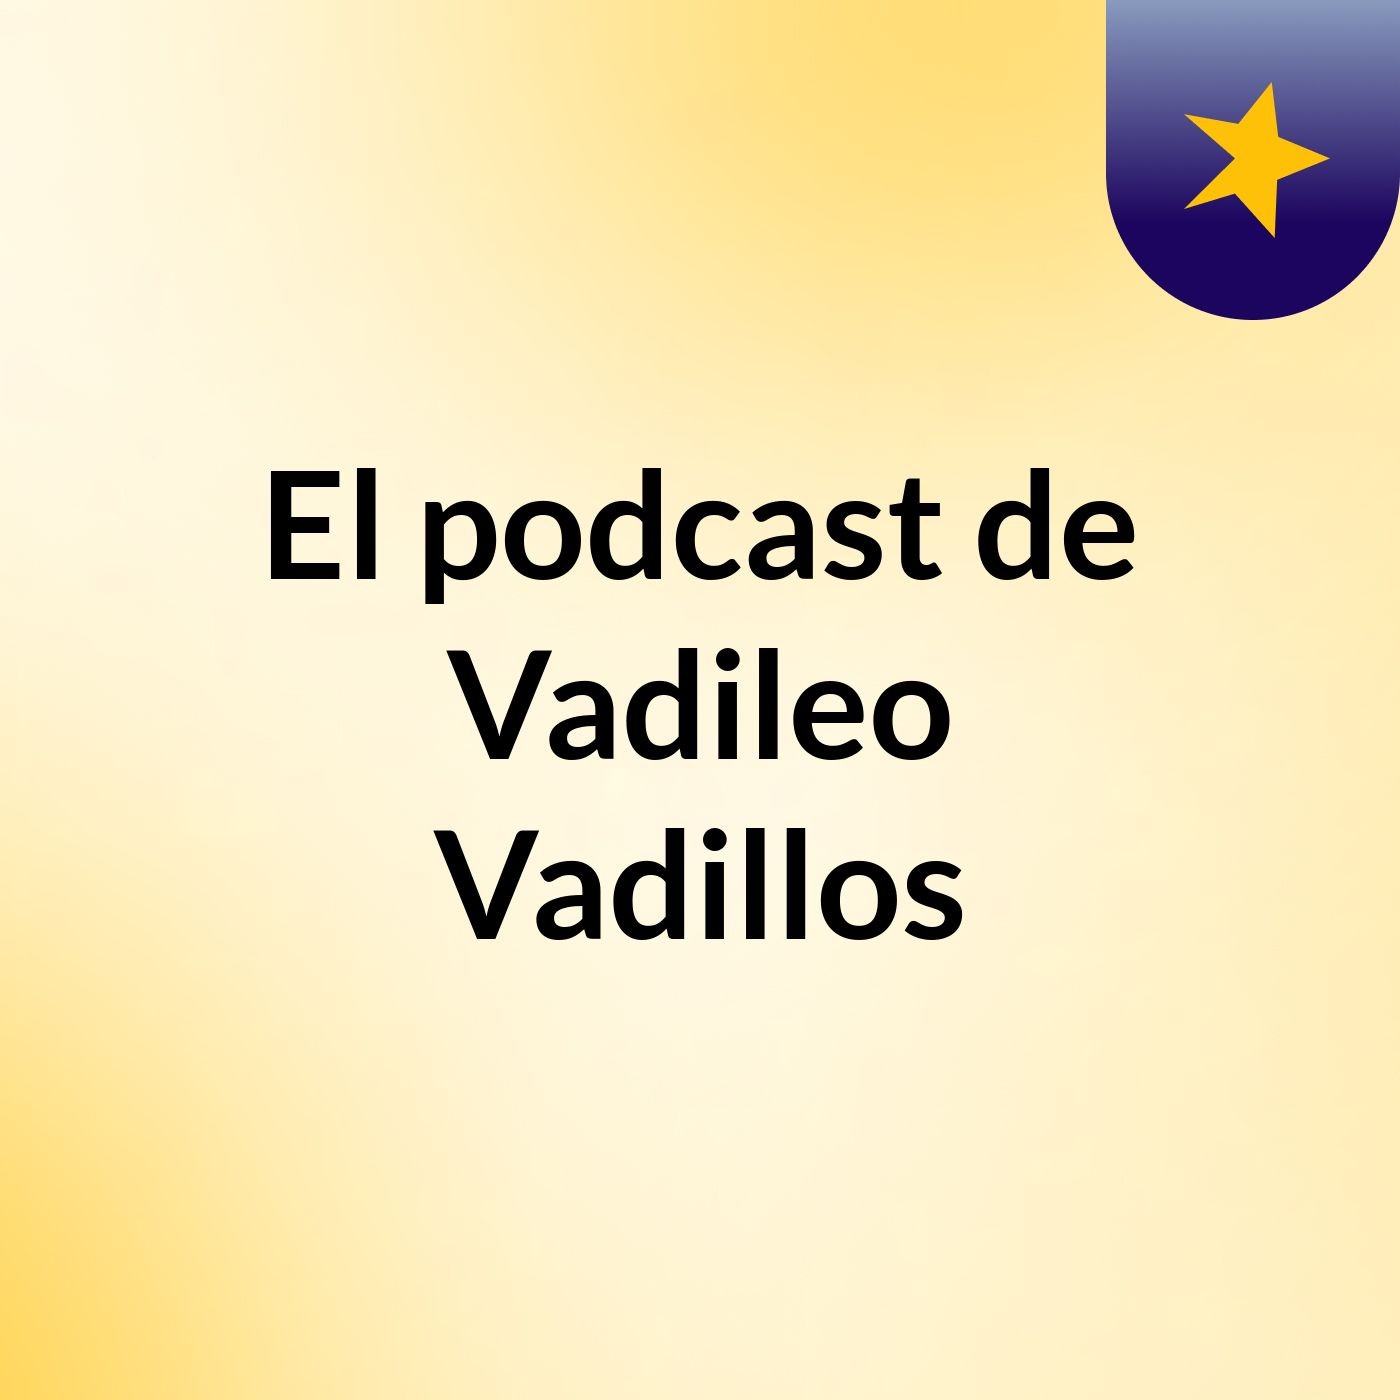 El podcast de Vadileo Vadillos